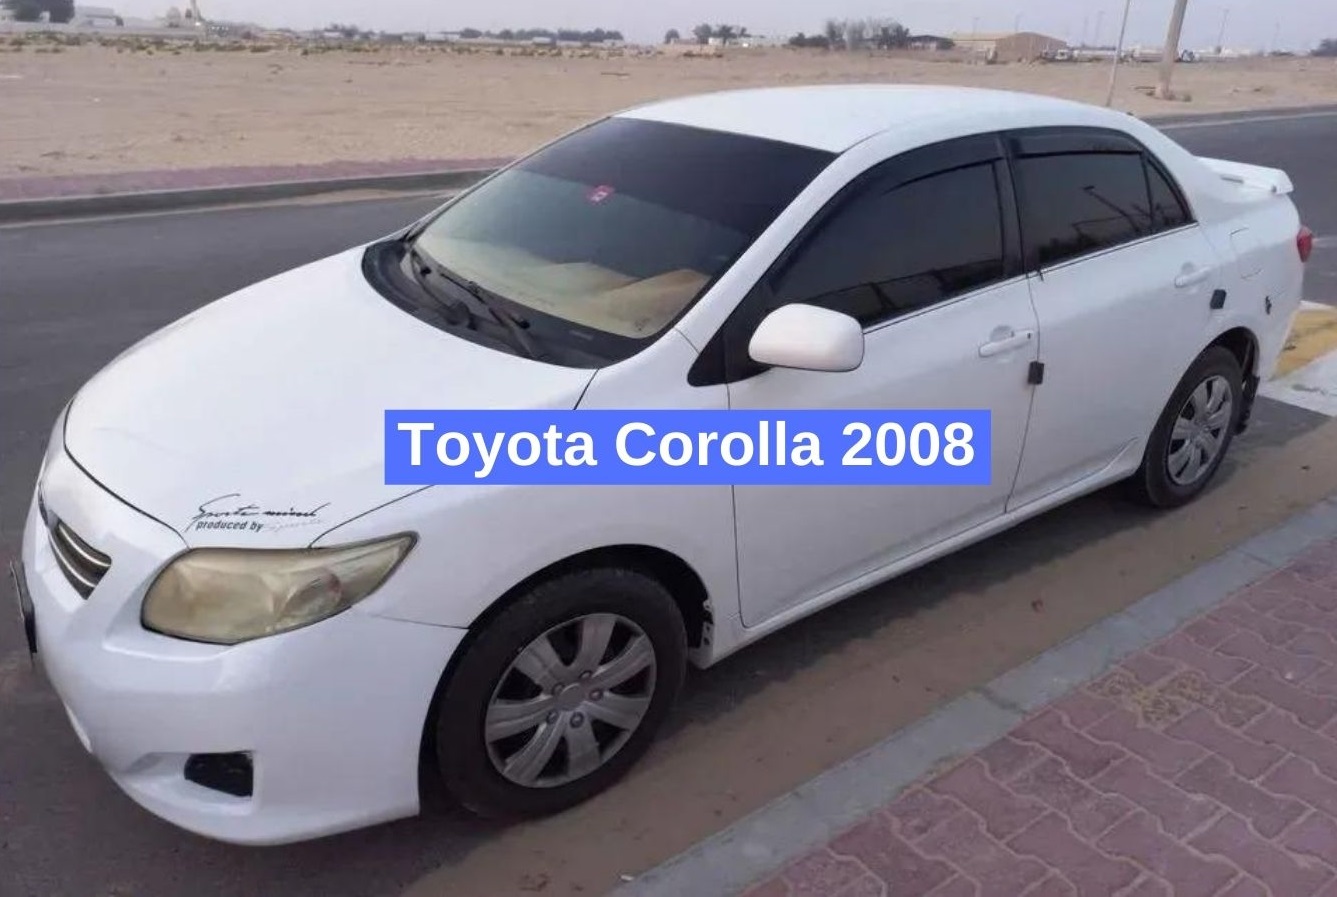 0001 7 - Toyota Corolla 2008